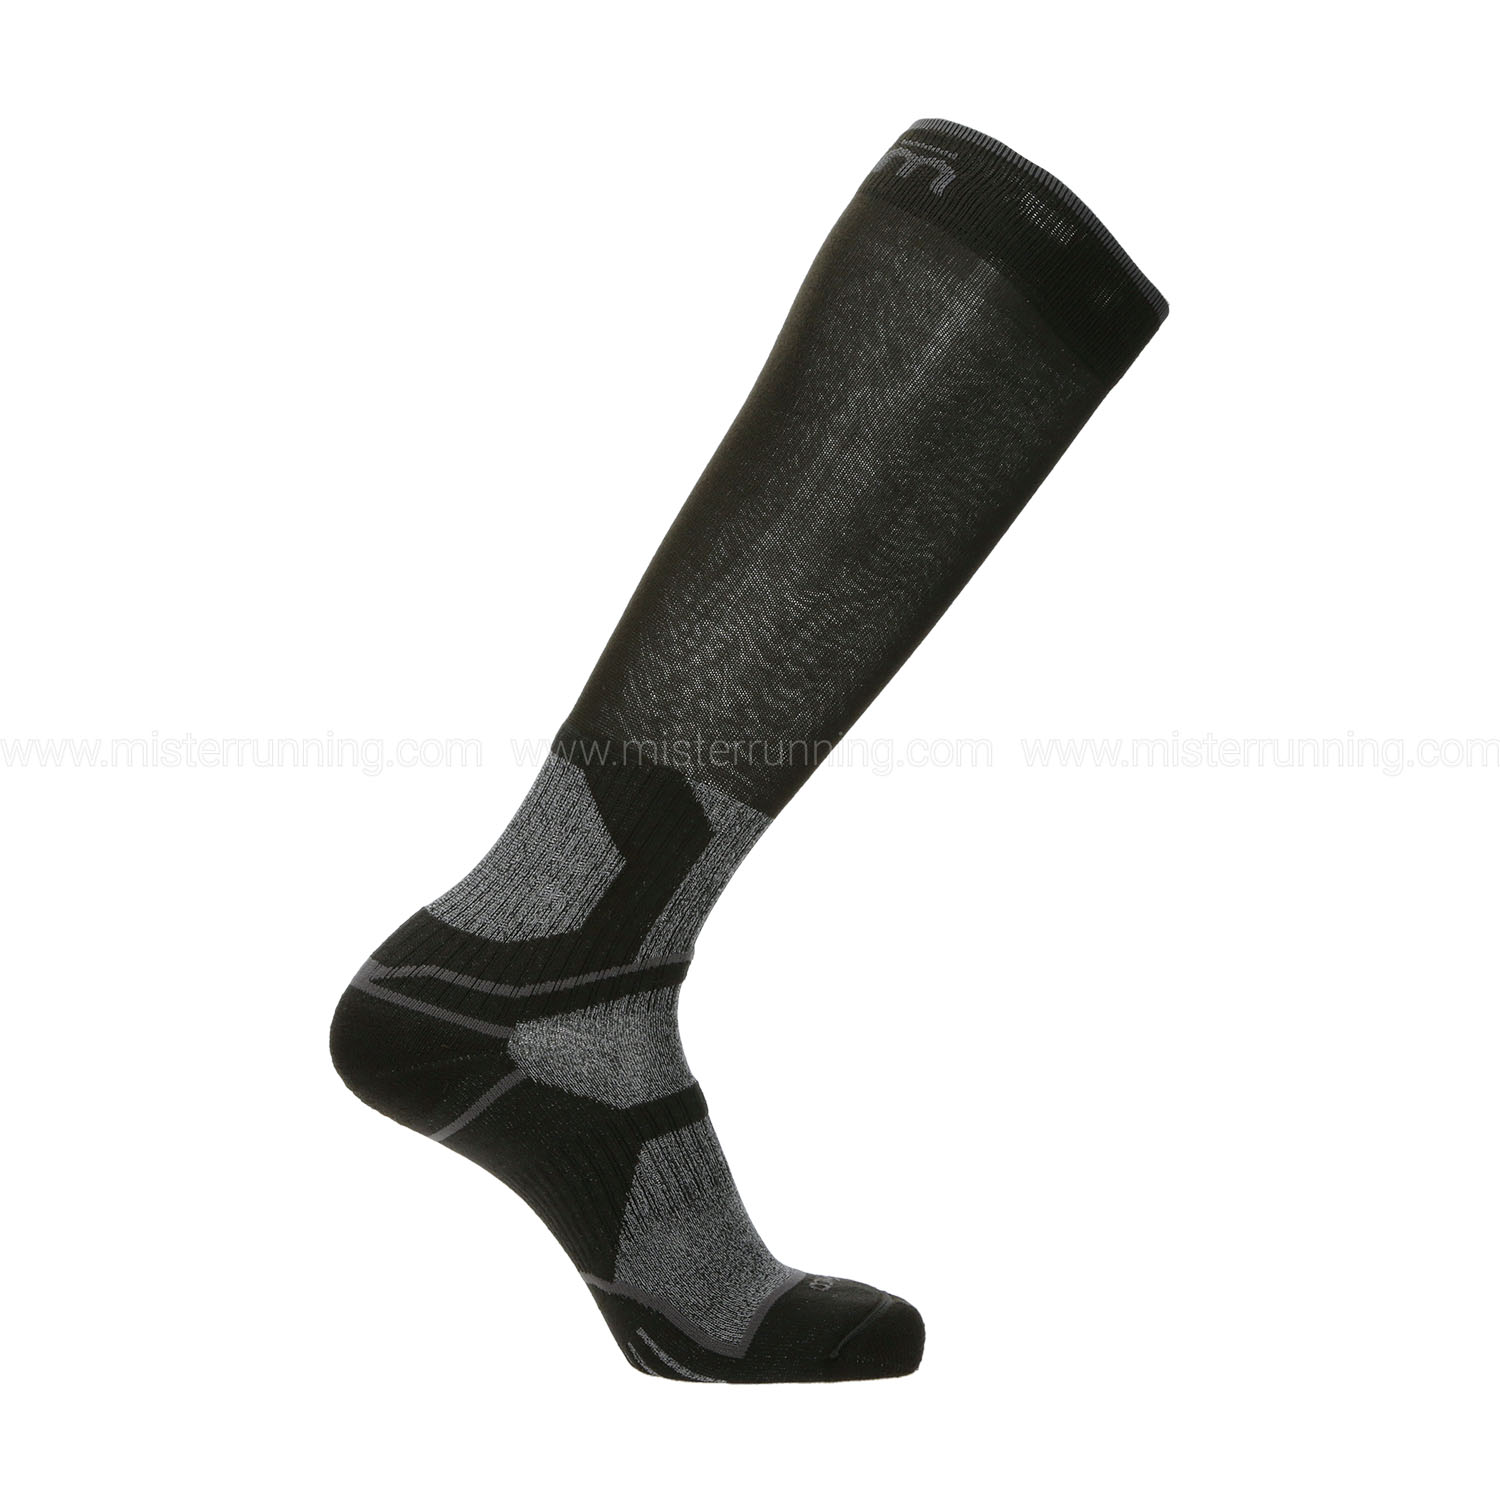 Mico Coolmax Medium Weight Socks - Antracite/Grigio